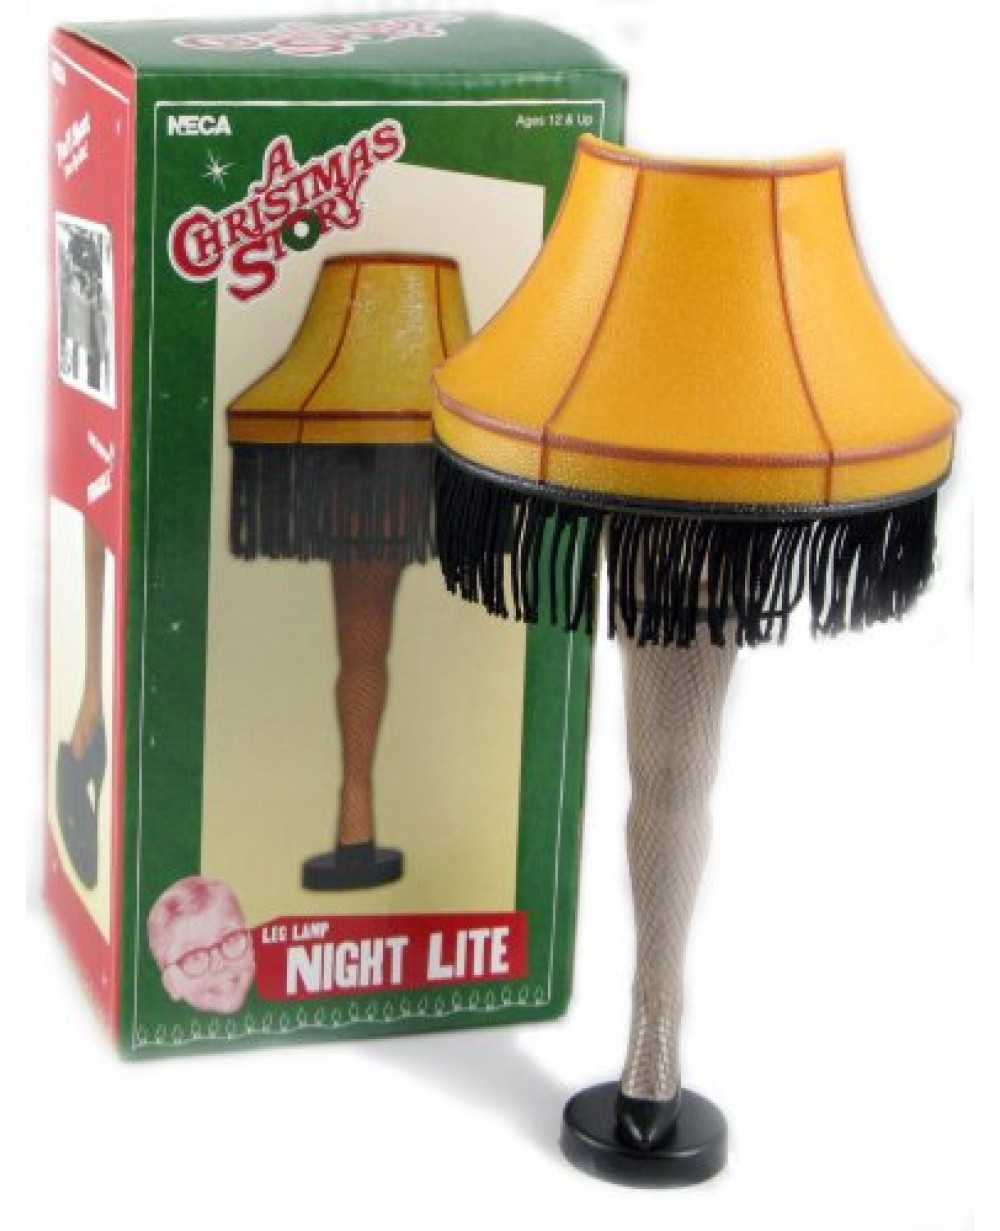 Christmas Story Leg Lamp Nightlight
 A Christmas Story Nightlight